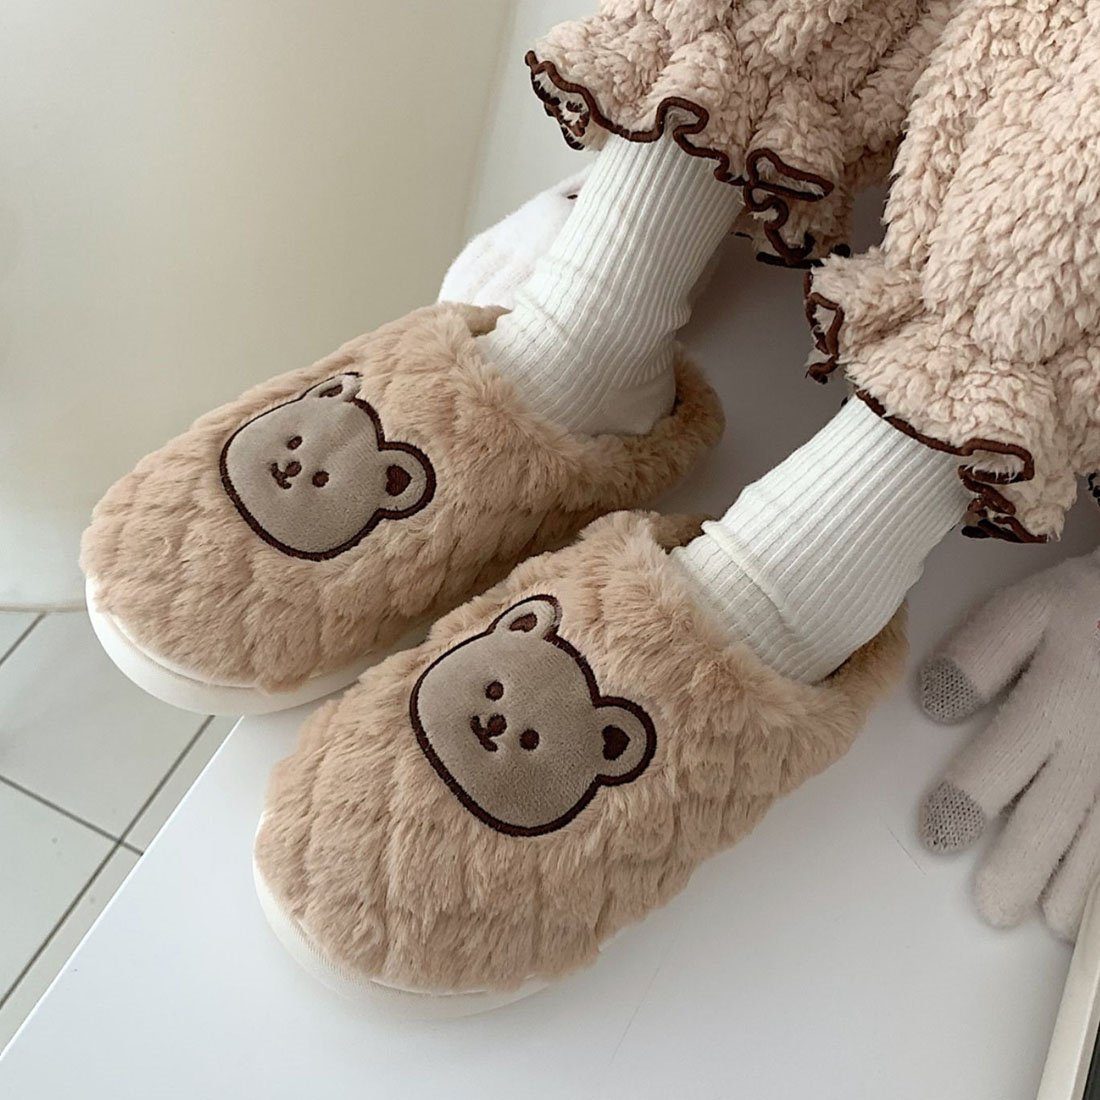 DÖRÖY WarmePlüschpantoffeln für Damen,Cartoon-Bären-Pantoffeln aus khaki Baumwolle Plüsch Hausschuhe